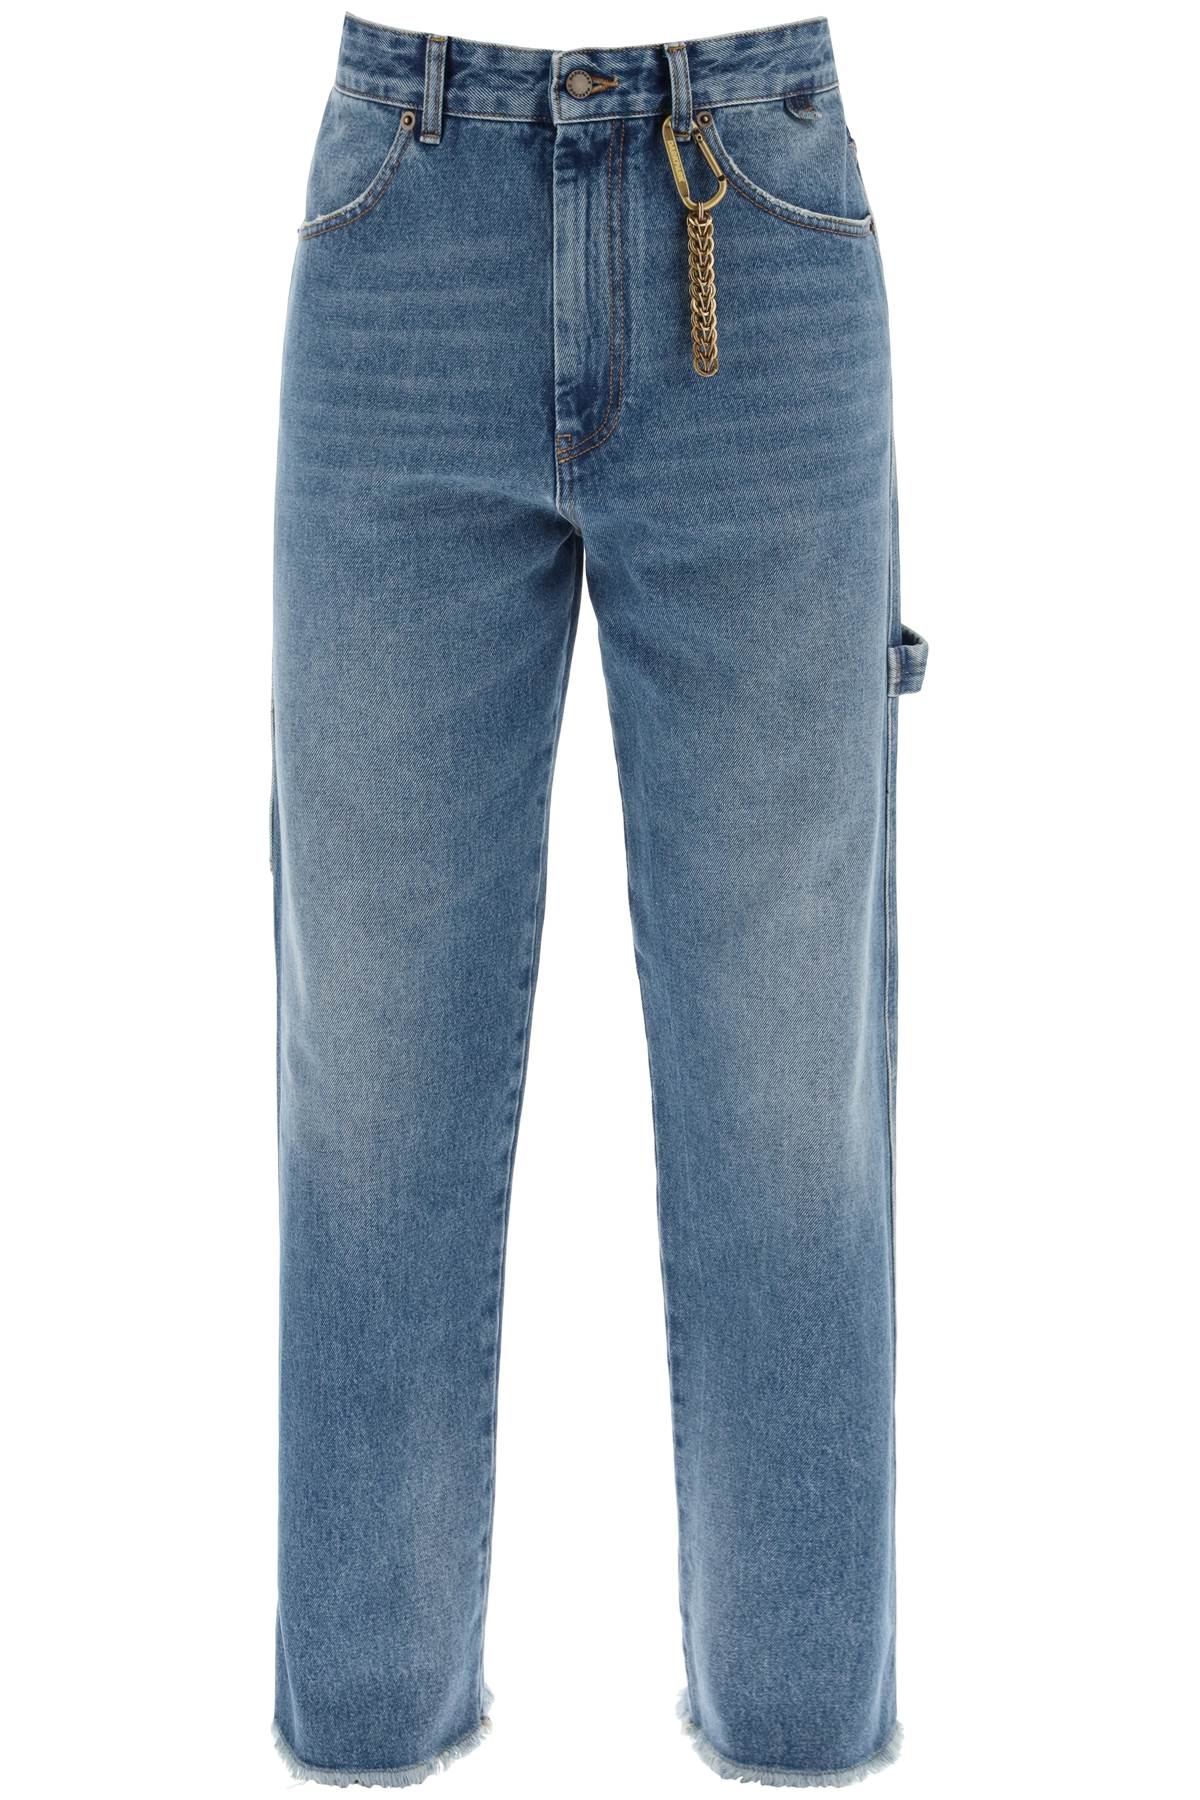 Darkpark john workwear jeans MTR01 DBL01W053 MEDIUM WASH